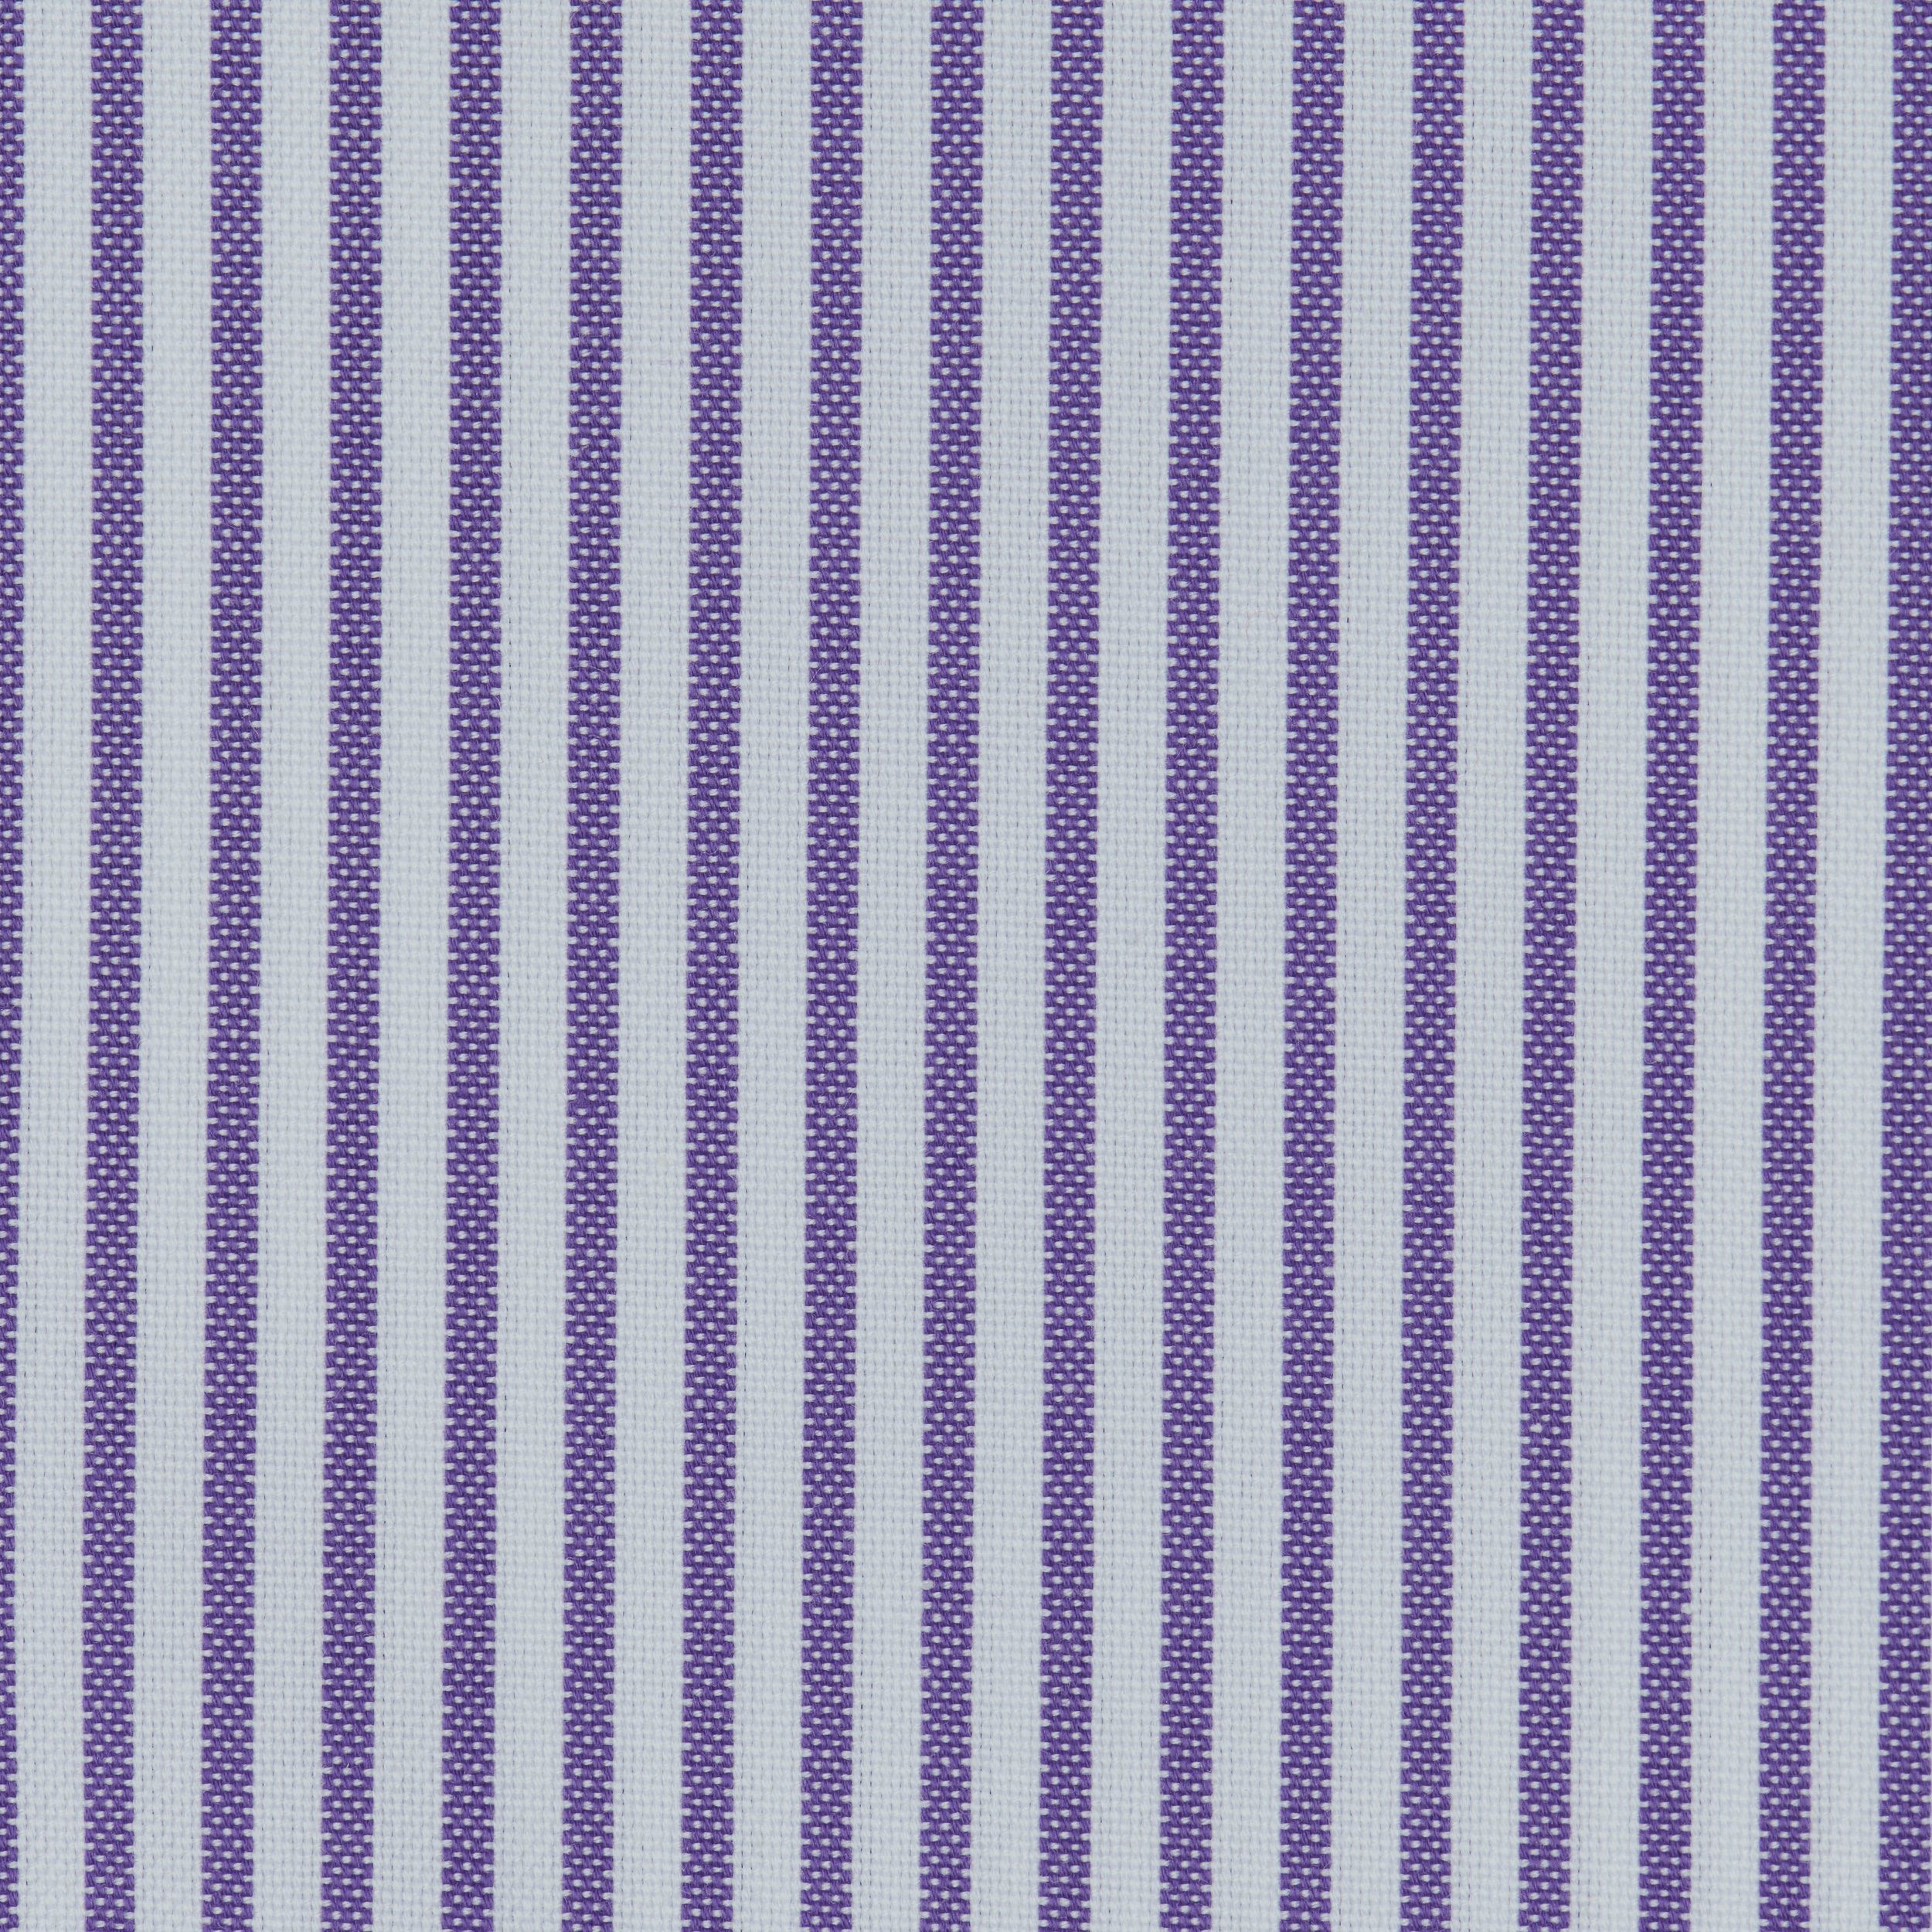 074 - Lavender Bankers Stripe SC Dress Shirt Cooper and Stewart 